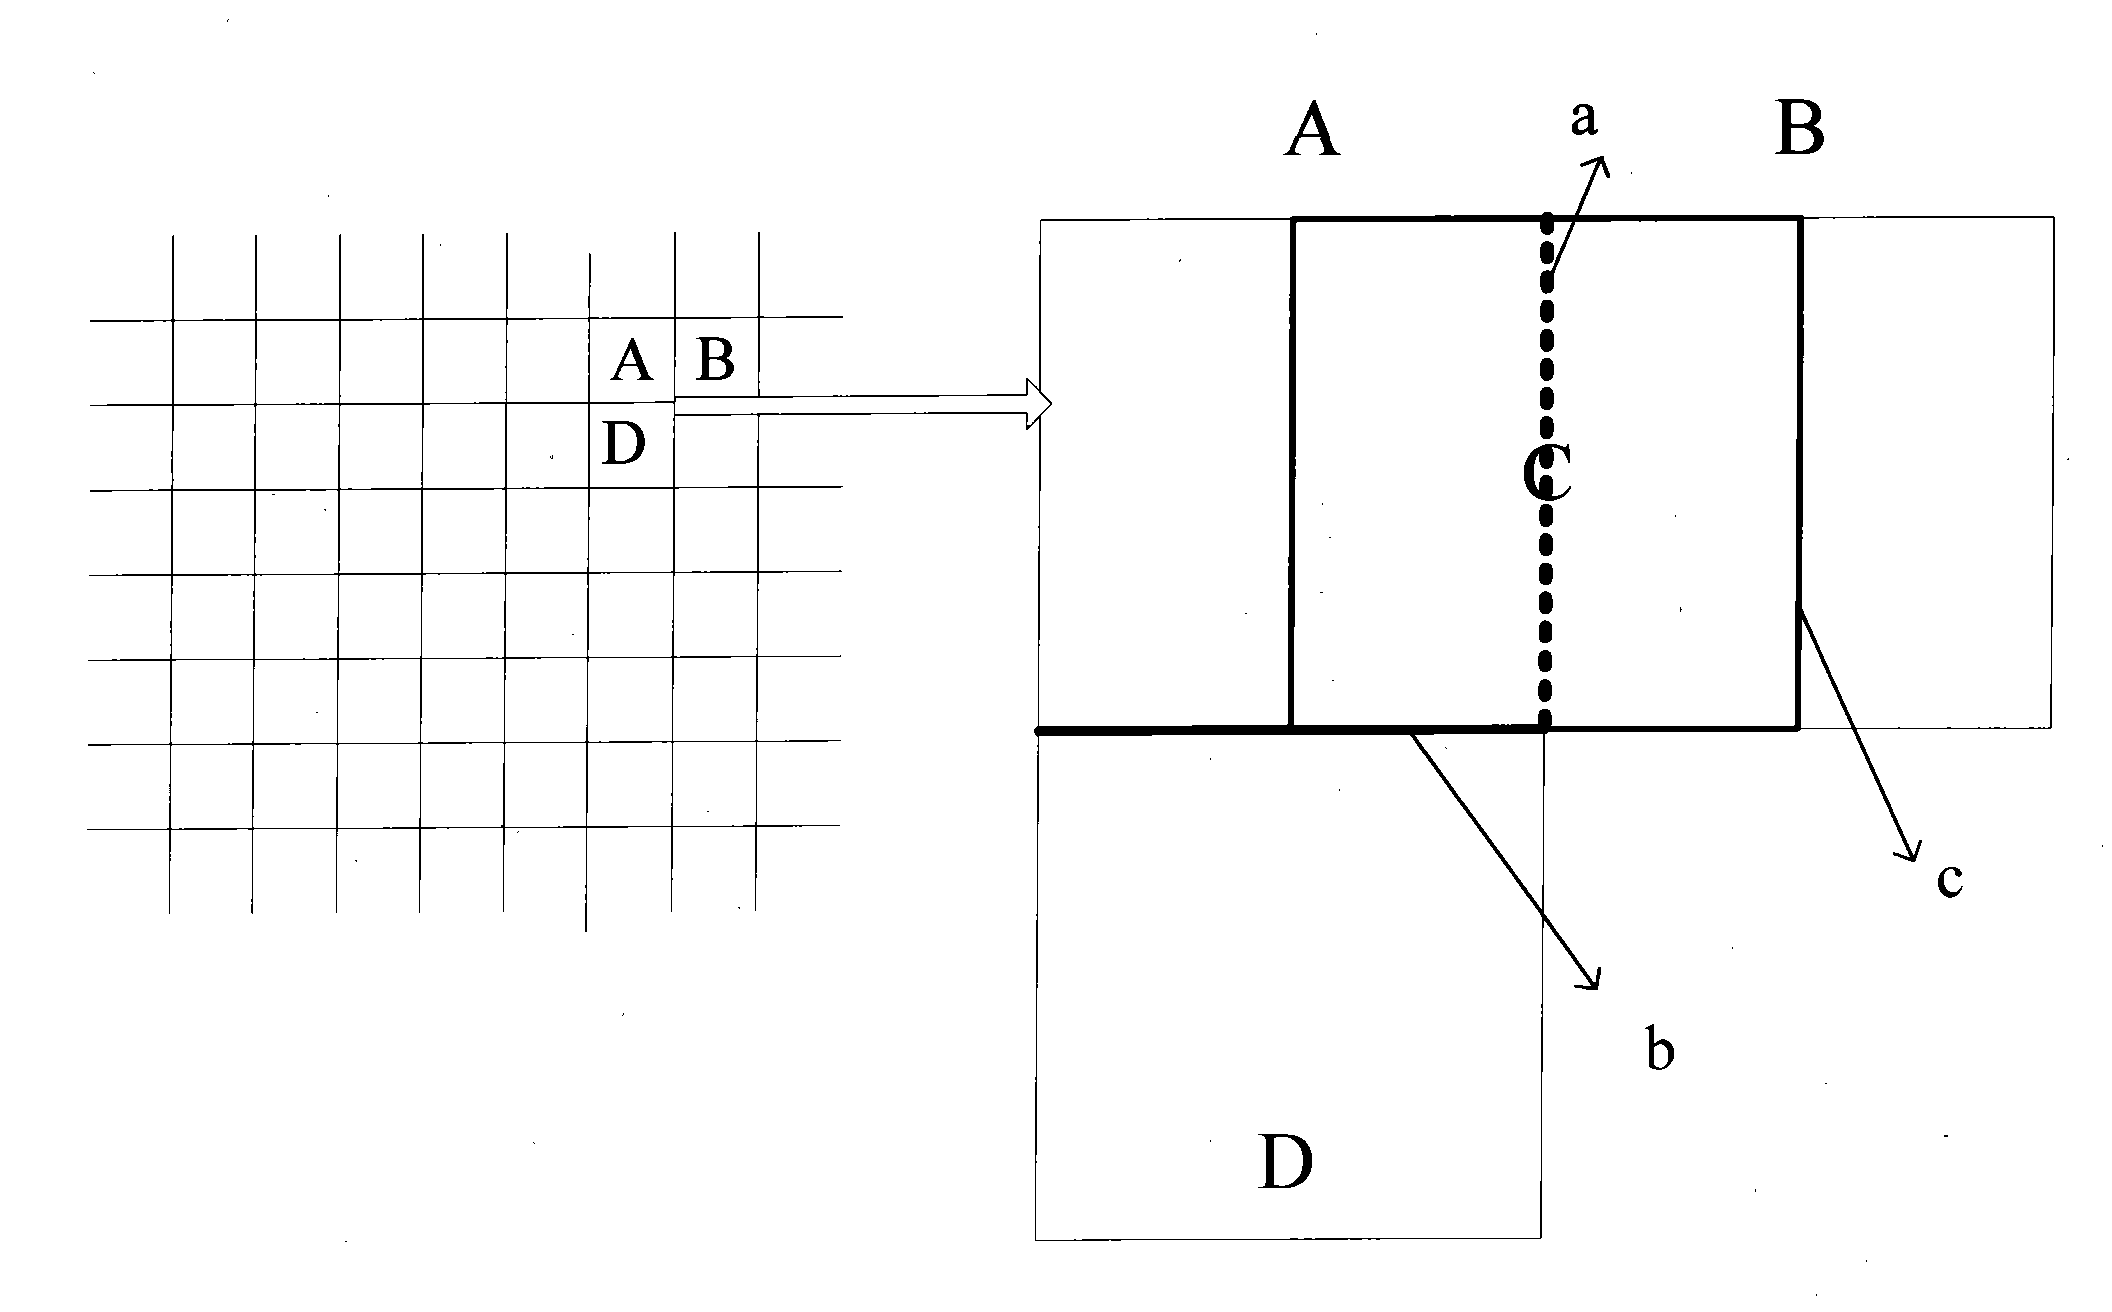 Automatic deblocking method based on sparse representation